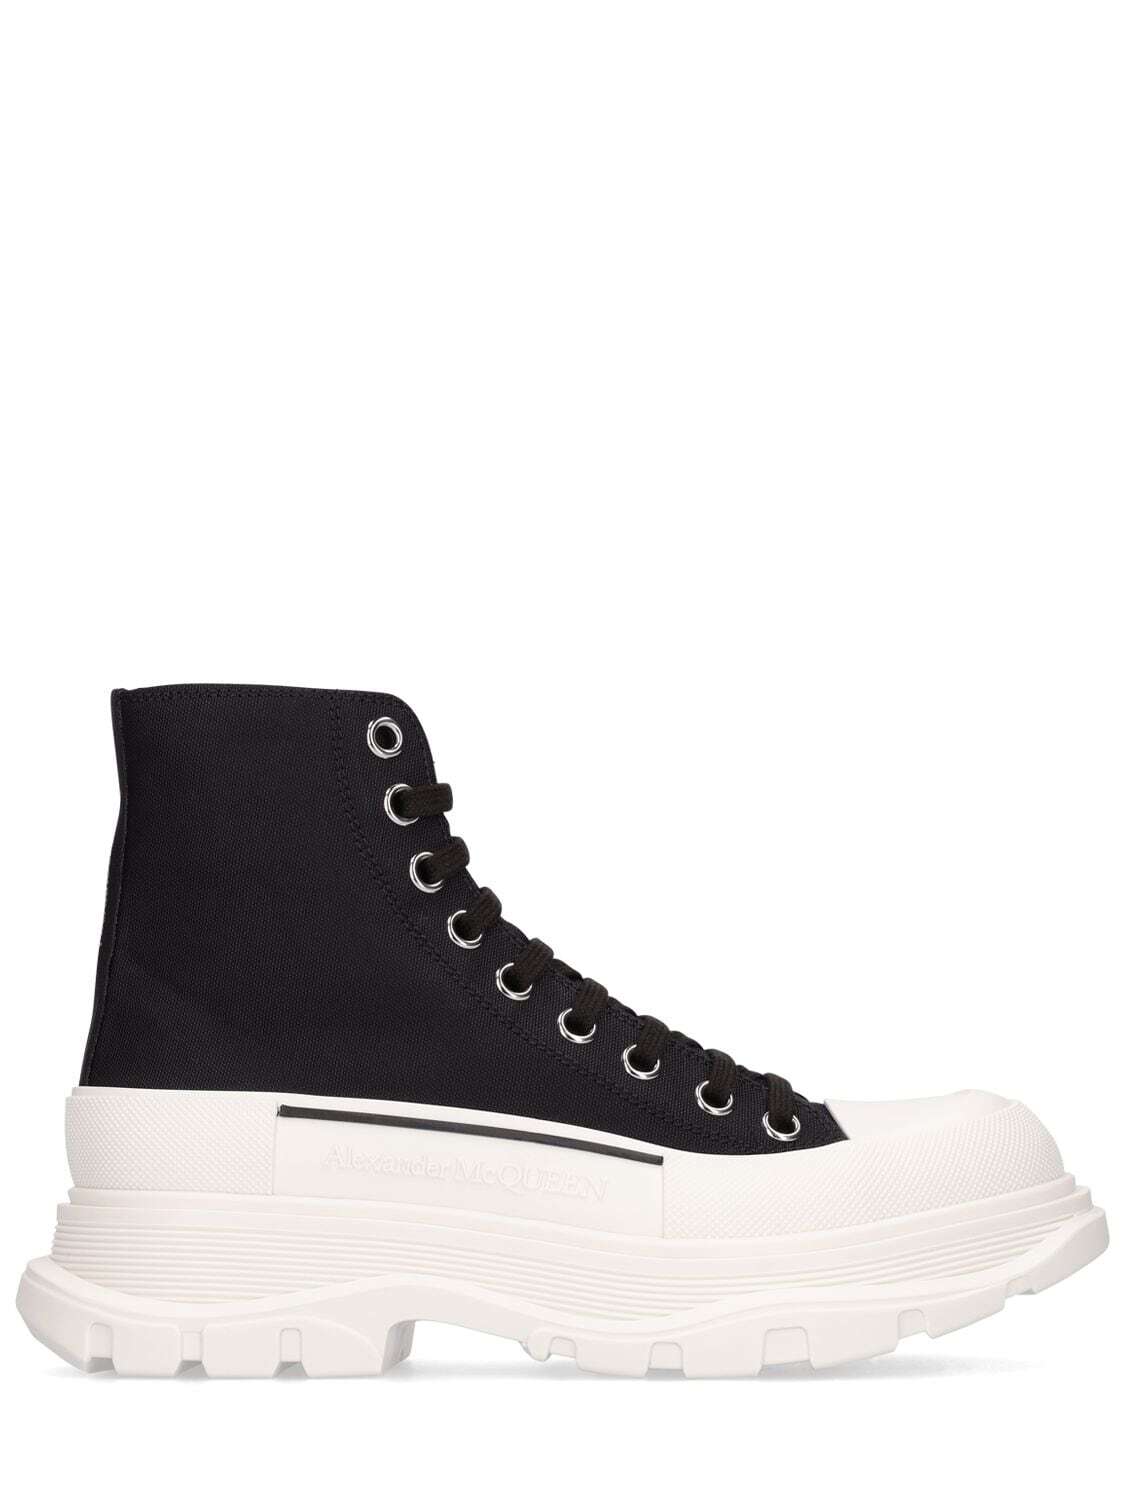 ALEXANDER MCQUEEN 45mm Cotton Sneakers in black / white